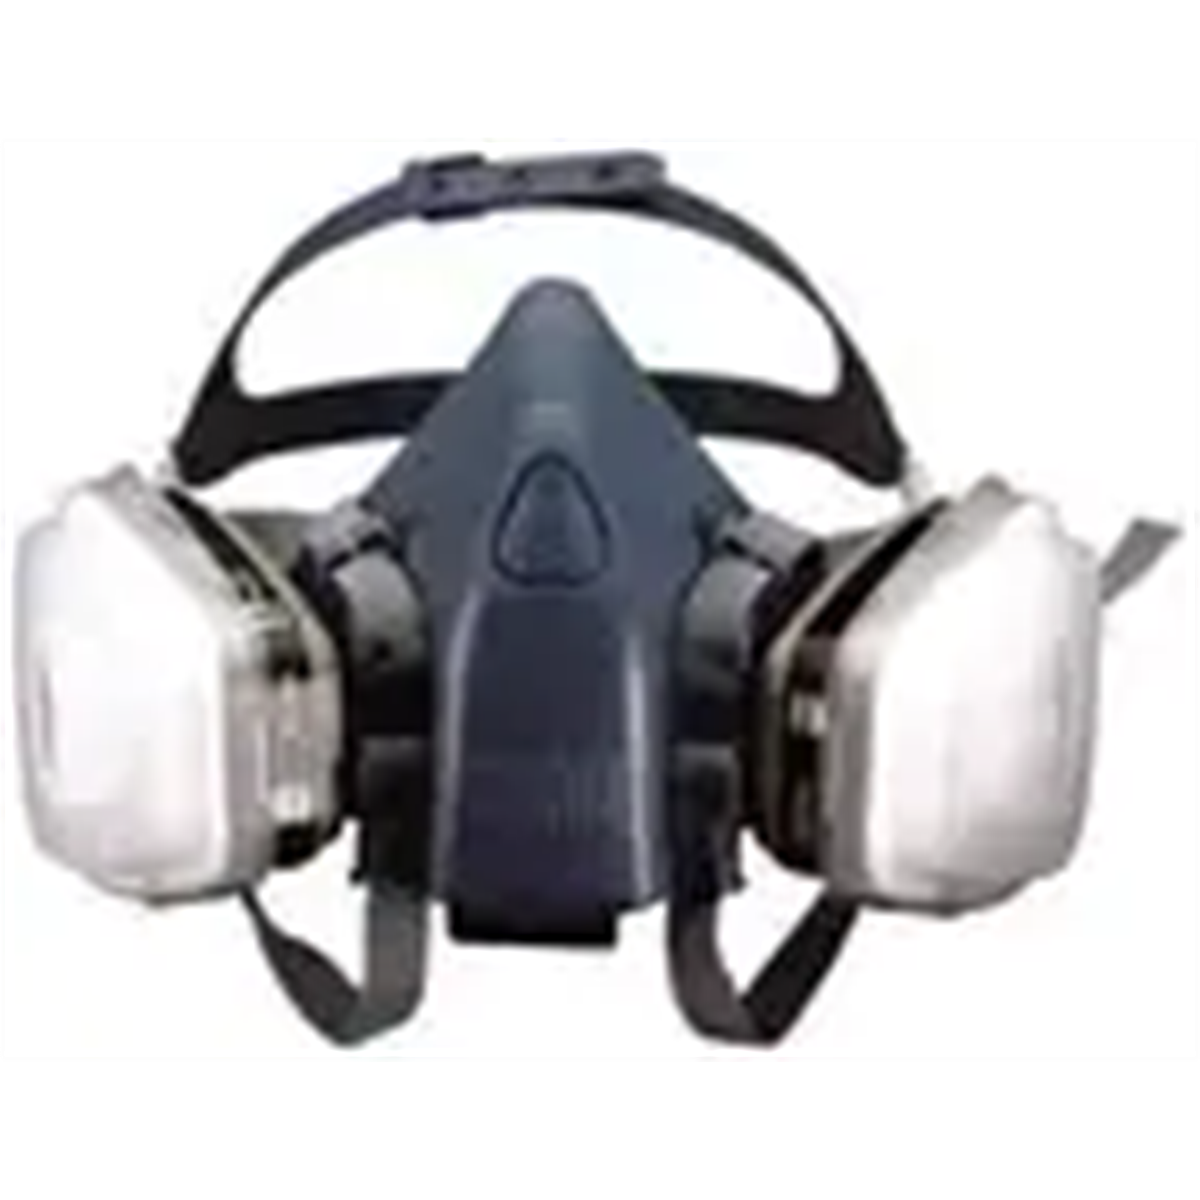 3M2516-Headlight Lens Restoration Kit-3M COMPANY